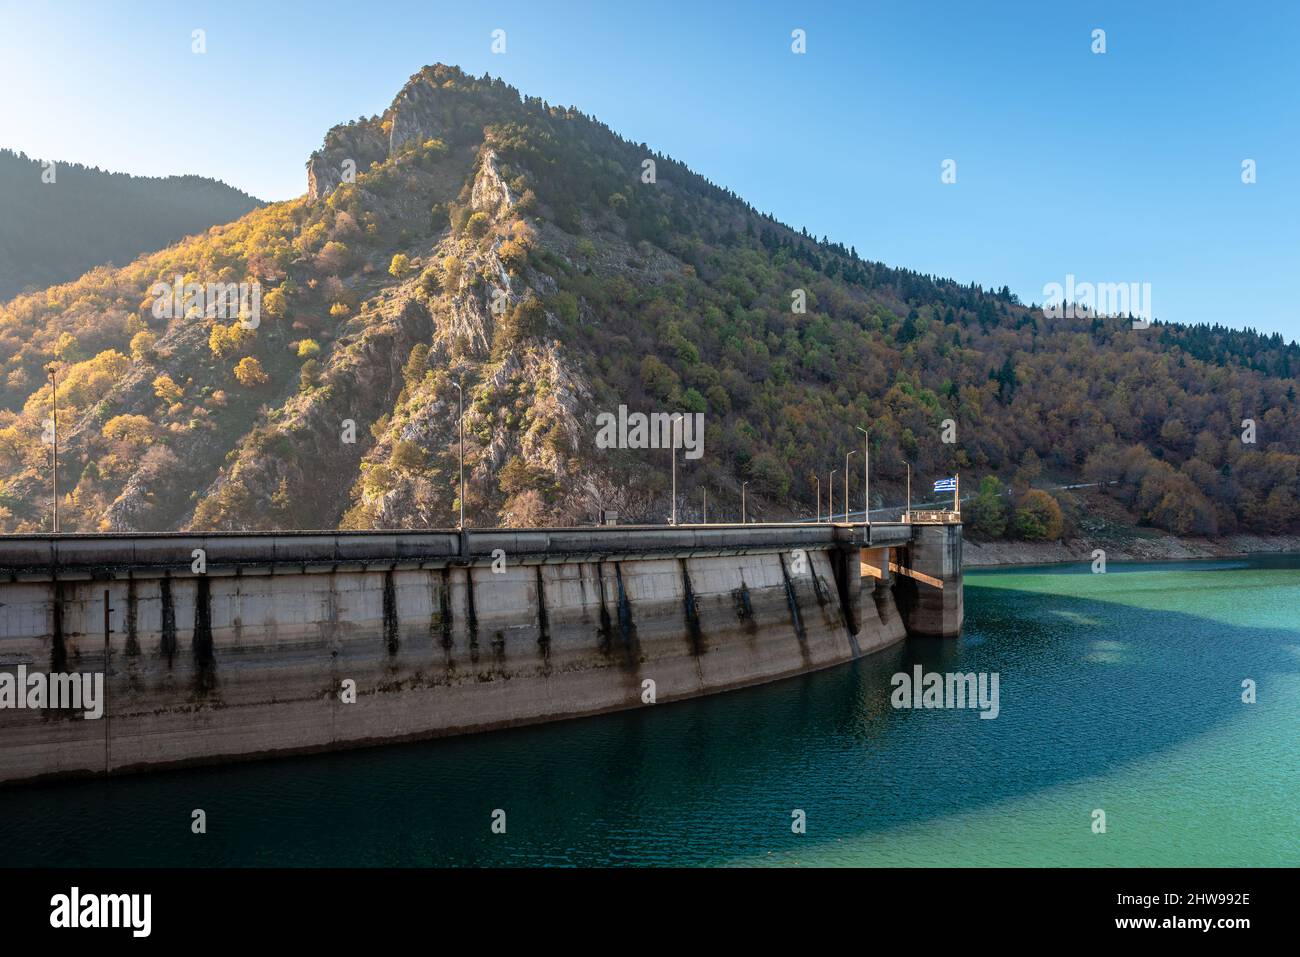 The Plastiras Dam, a concrete arch dam in Karditsa regional unit, Greece that impounds the Tavropos River, creating the artificial lake Plastiras. Stock Photo